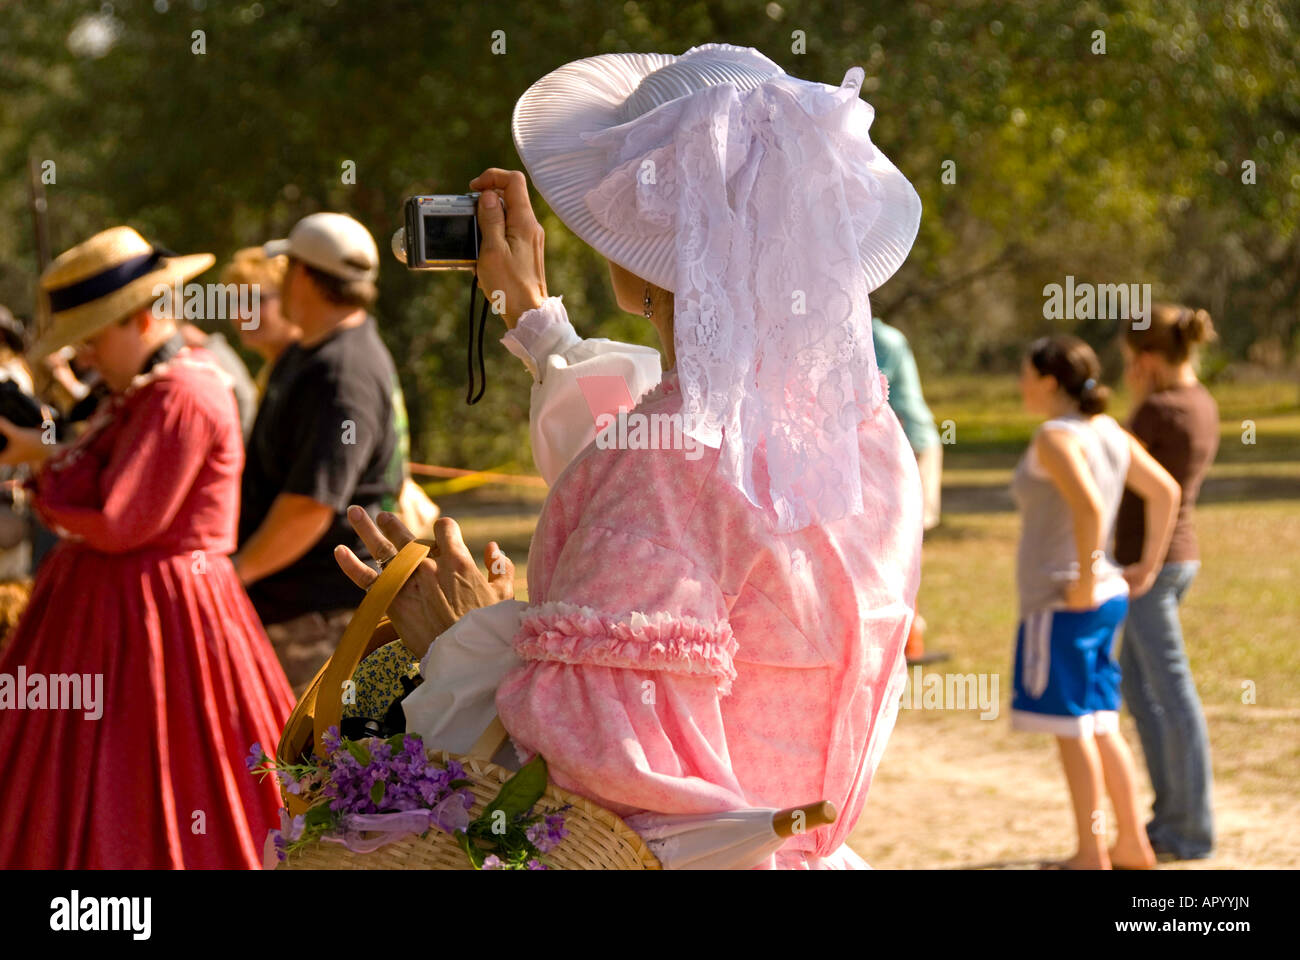 Woman in Civil War era clothing with digital camera horizontal Stock Photo